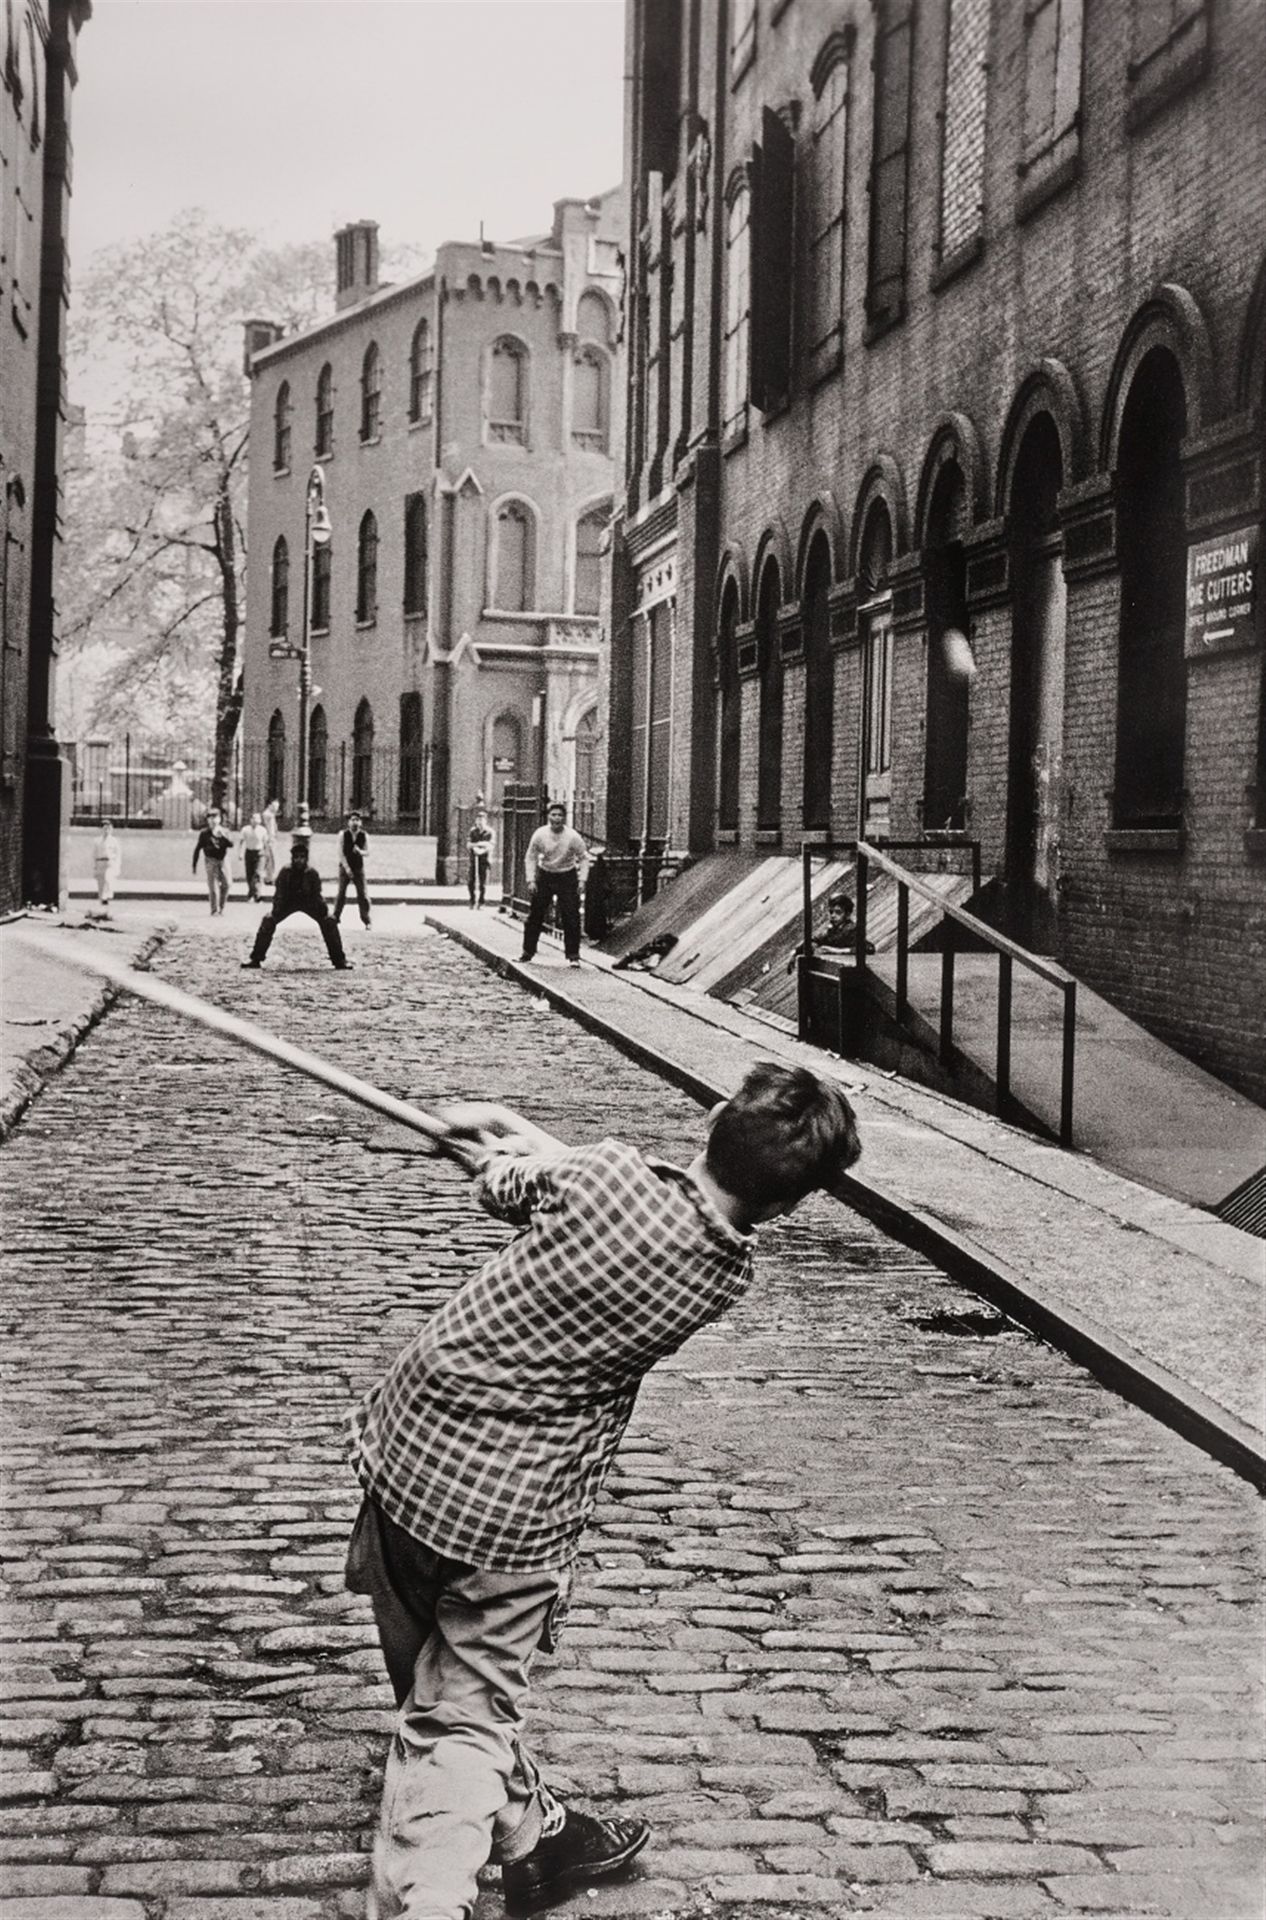 Leonard Freed, Little Italy - Stick Ball, New York